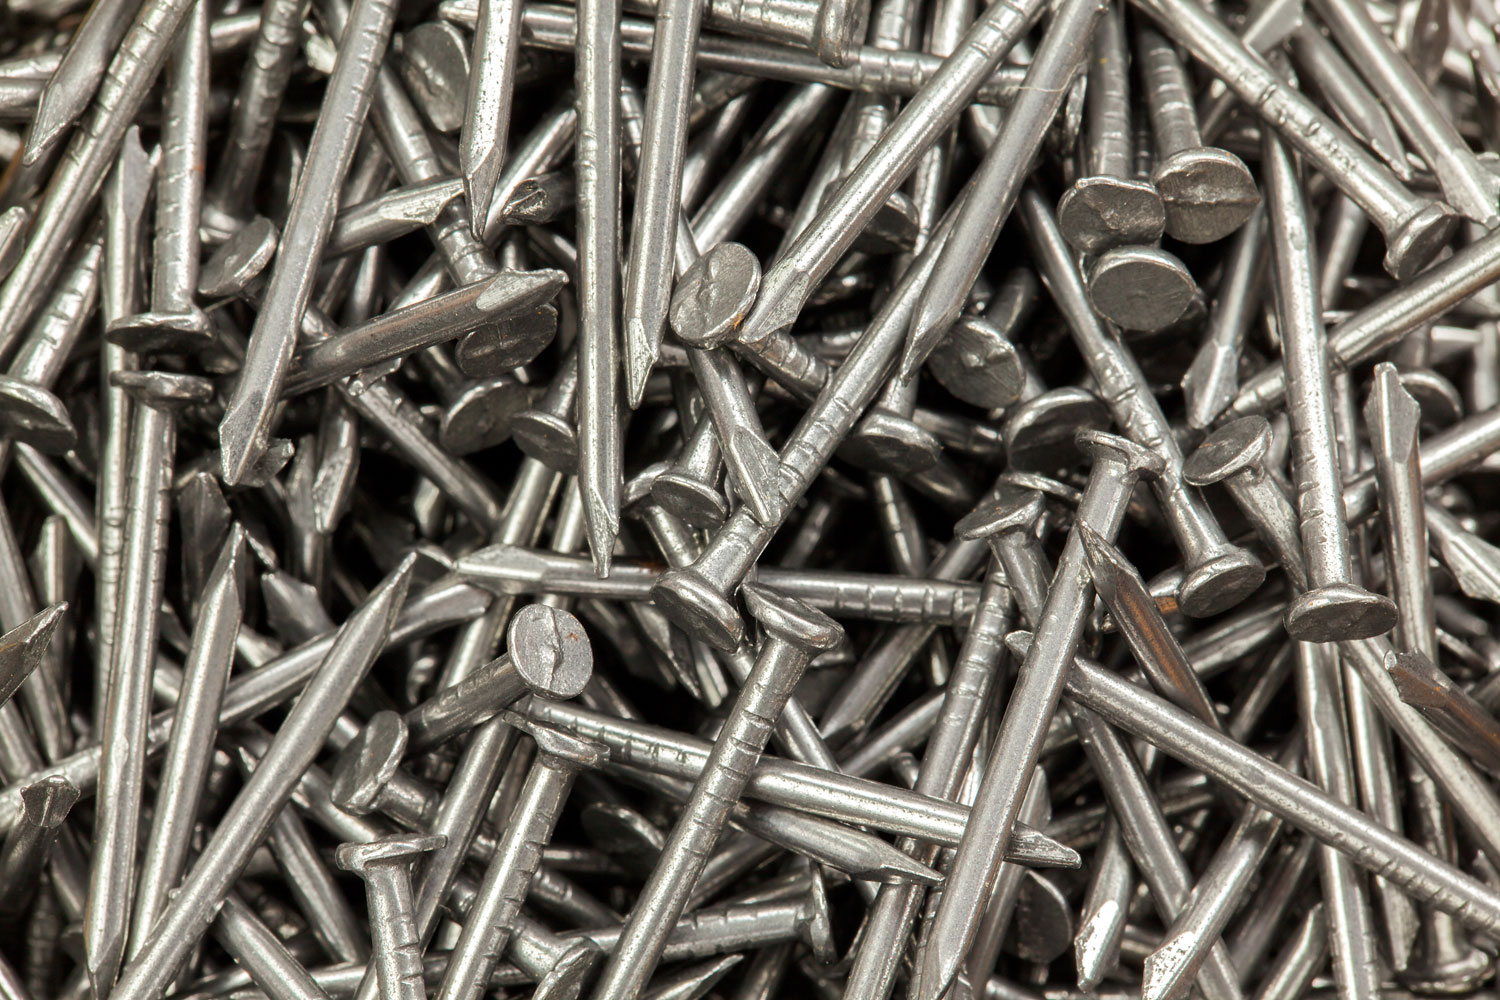 A stockpile of nails